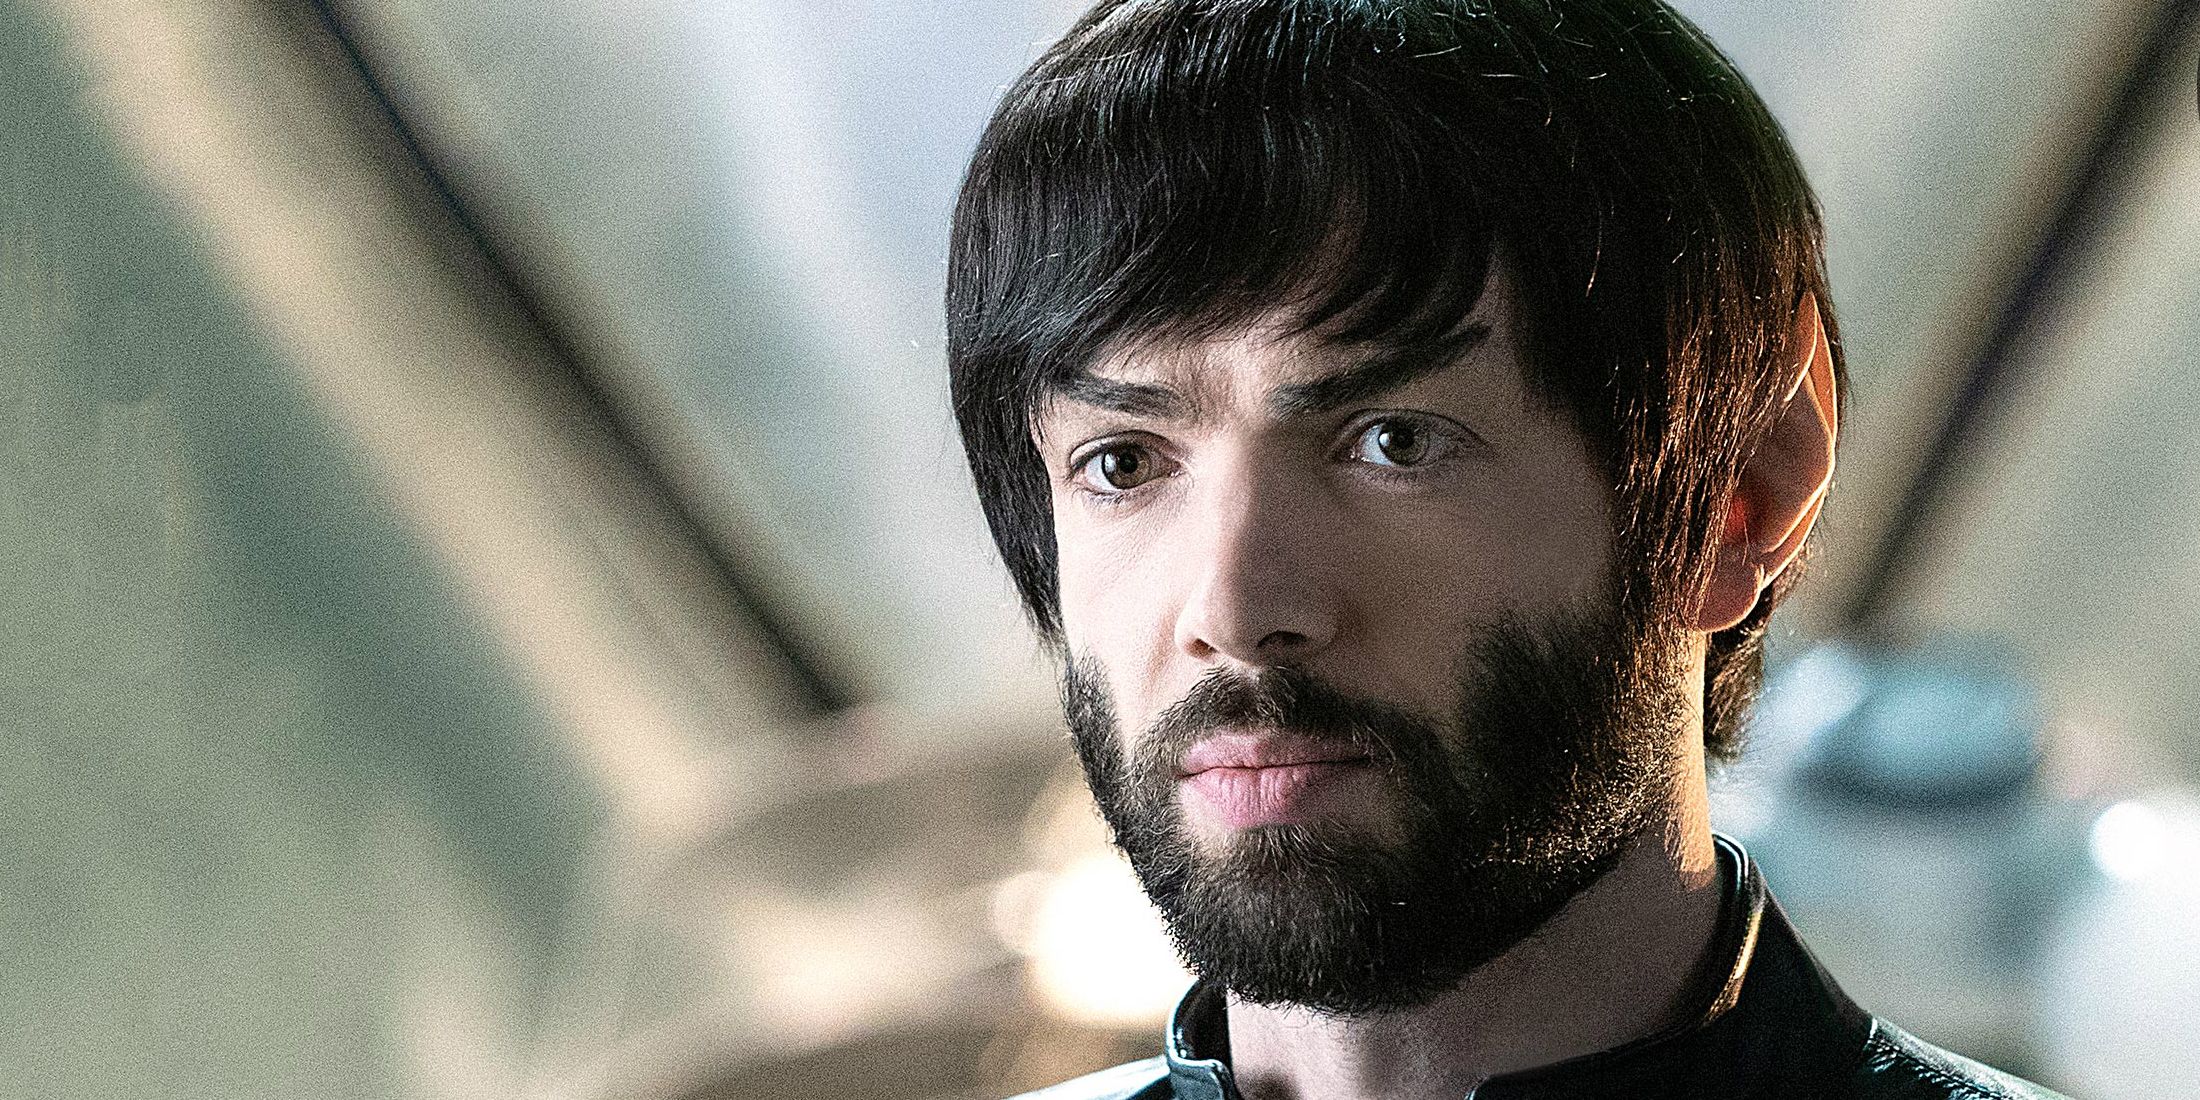 star-trek-discovery-spock-revealed-with-no-beard-in-enterprise-uniform